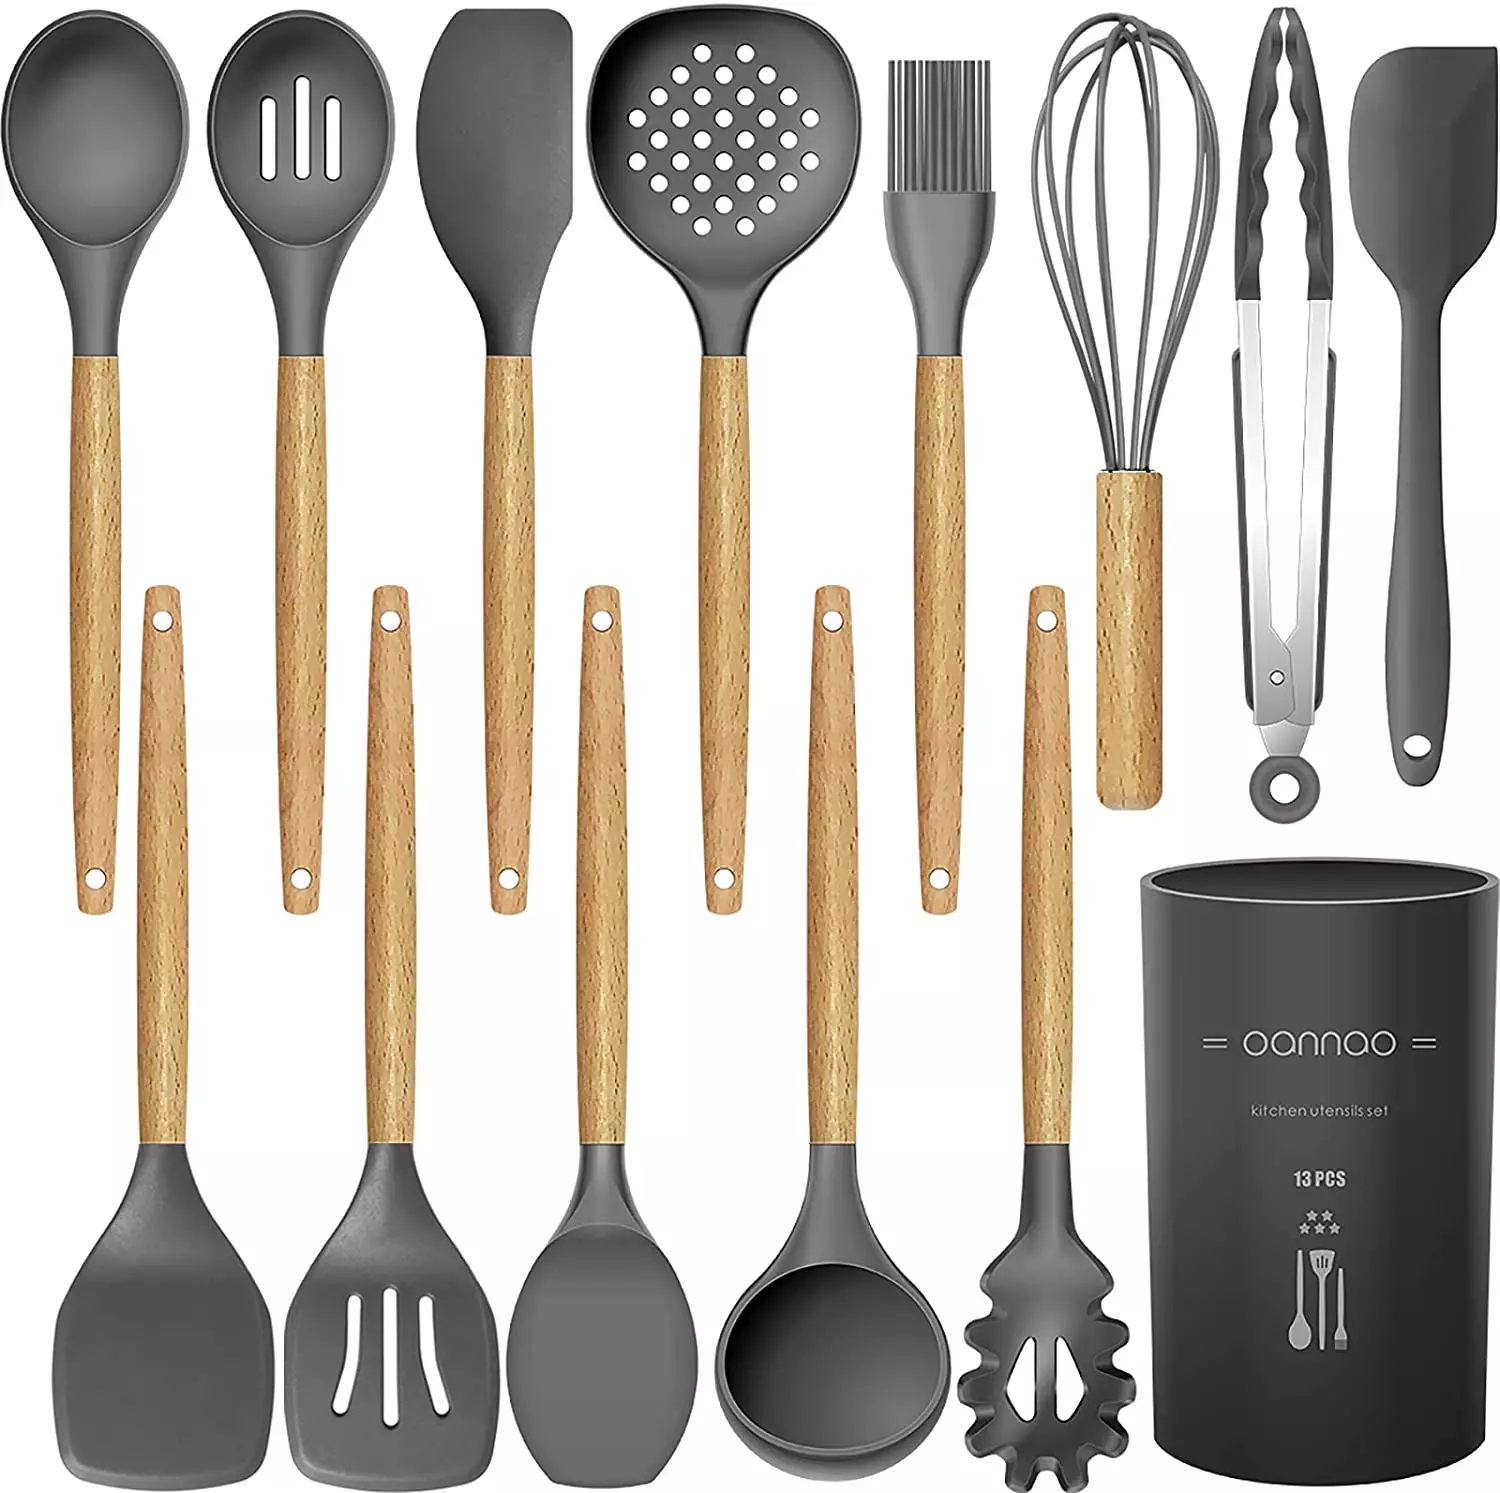 https://www.momjunction.com/wp-content/uploads/product-images/mibote-silicone-cooking-kitchen-utensils_afl2589.jpg.webp